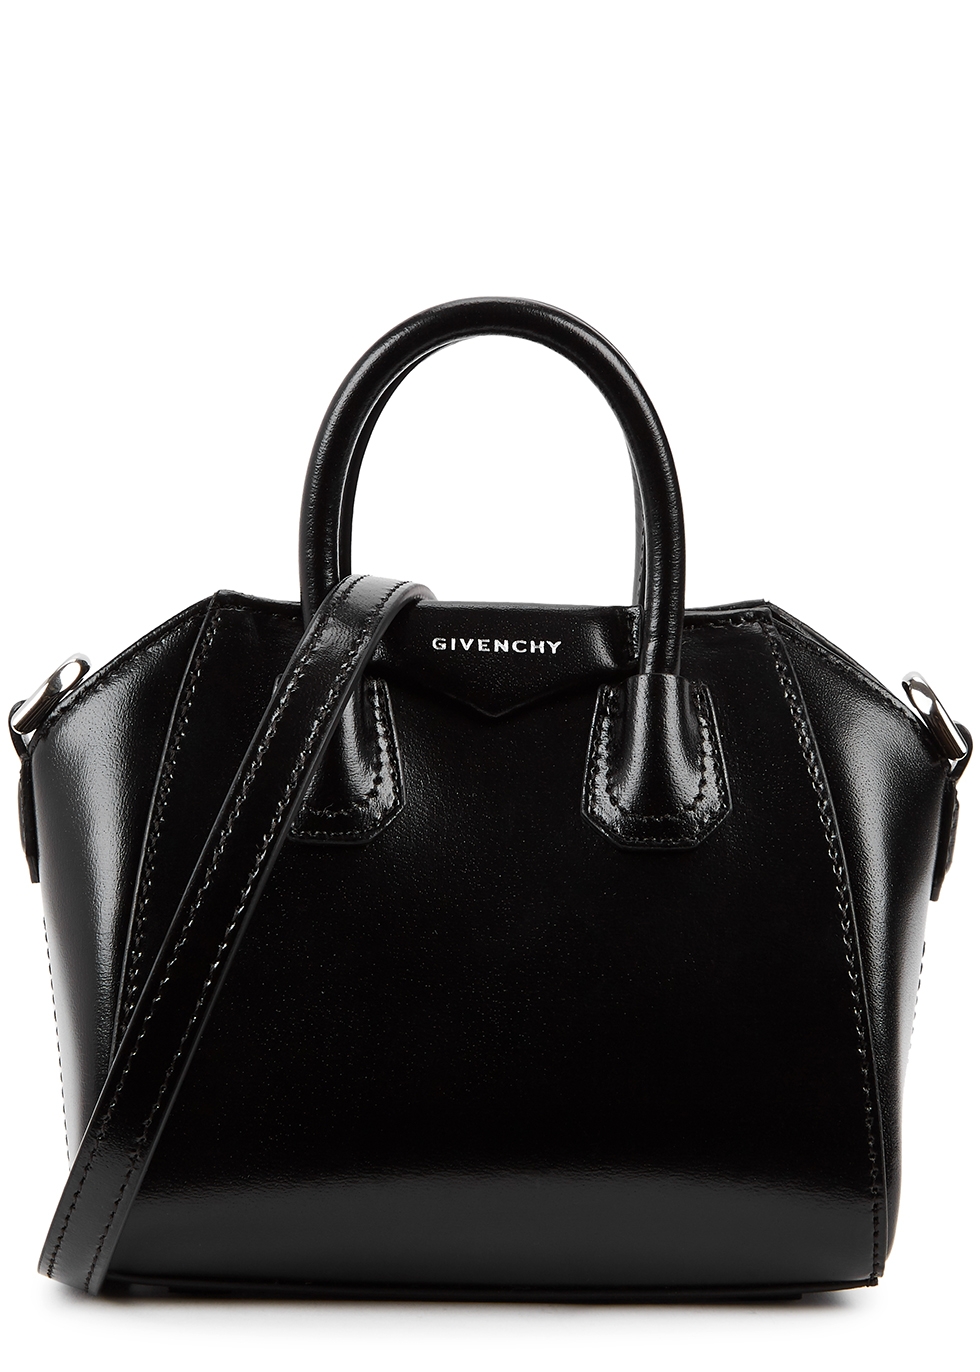 Givenchy Antigona micro fuchsia leather top handle bag